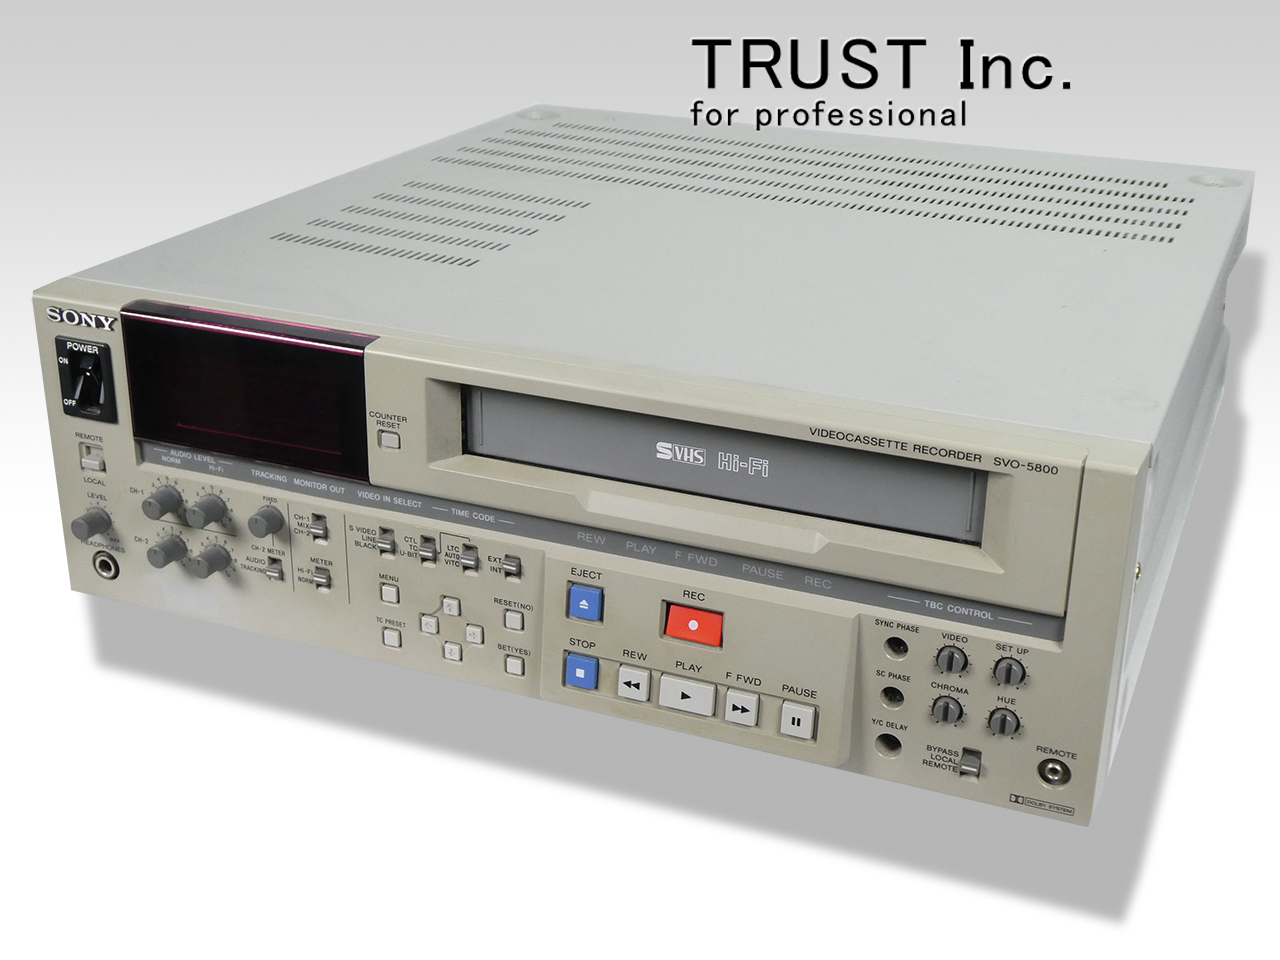 SVO-5800 SONYソニーS-VHS業務用ビデオカセットレコーダー - テレビ